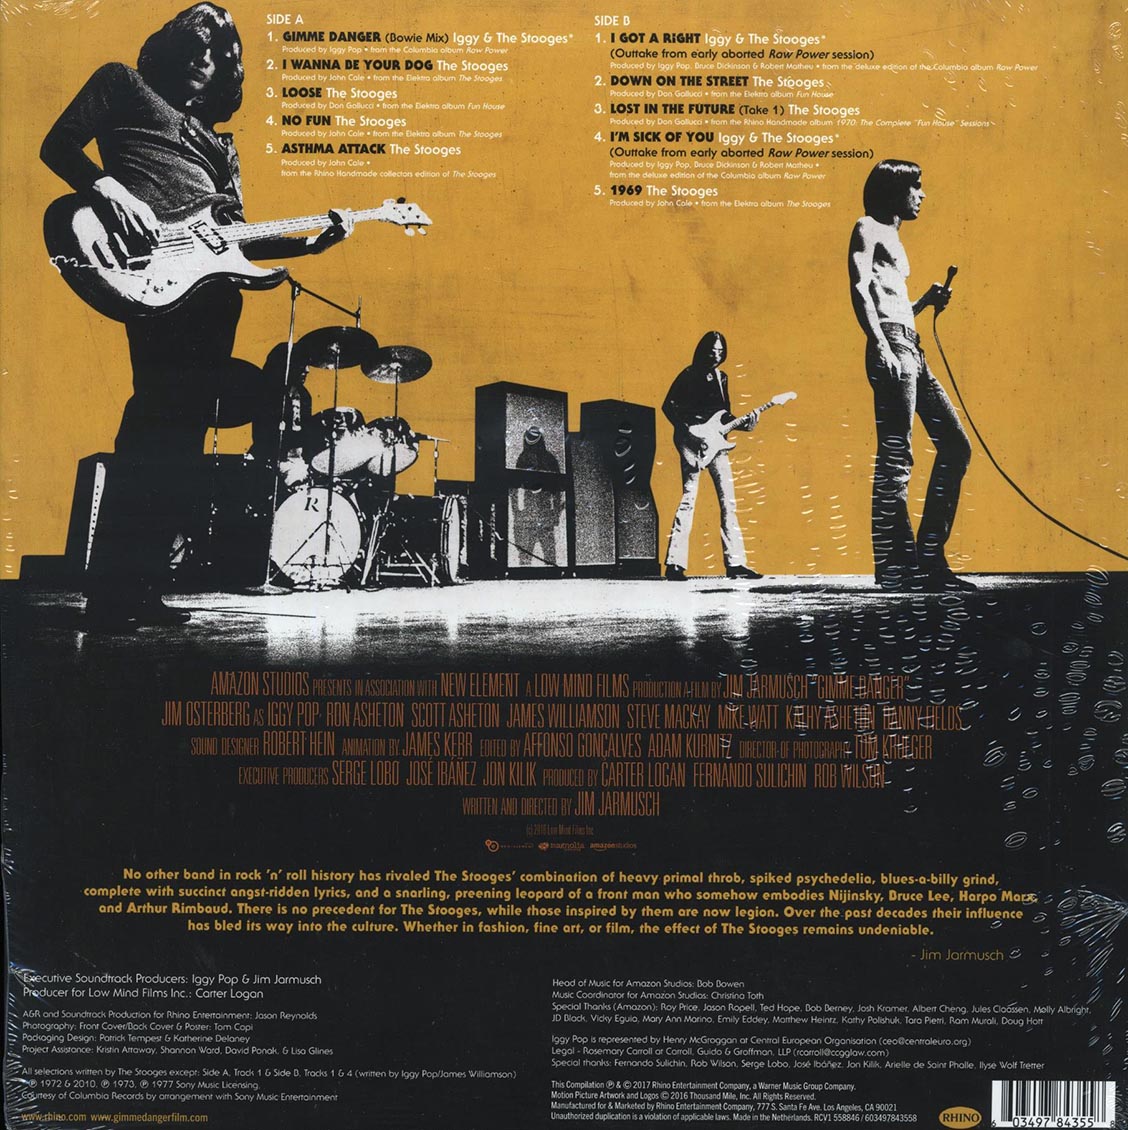 The Stooges - Gimme Danger: Music From The Motion Picture (ltd. ed.) (clear vinyl) - Vinyl LP, LP